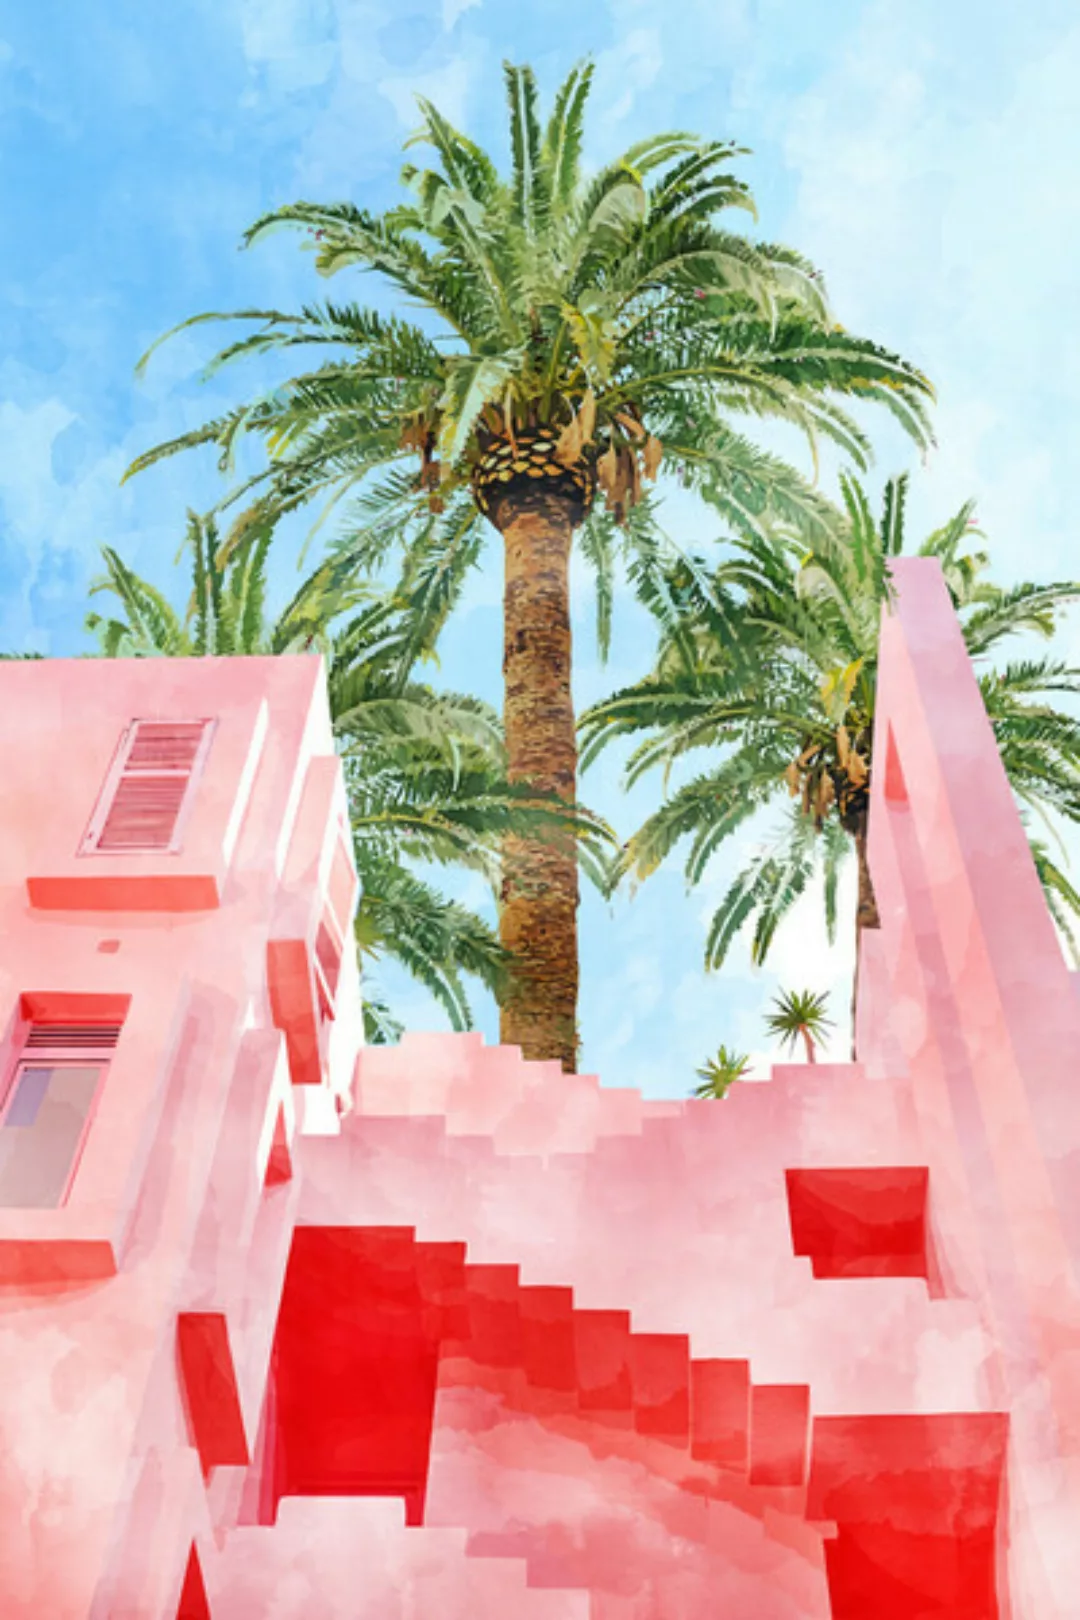 Poster / Leinwandbild - Pink Tropical günstig online kaufen